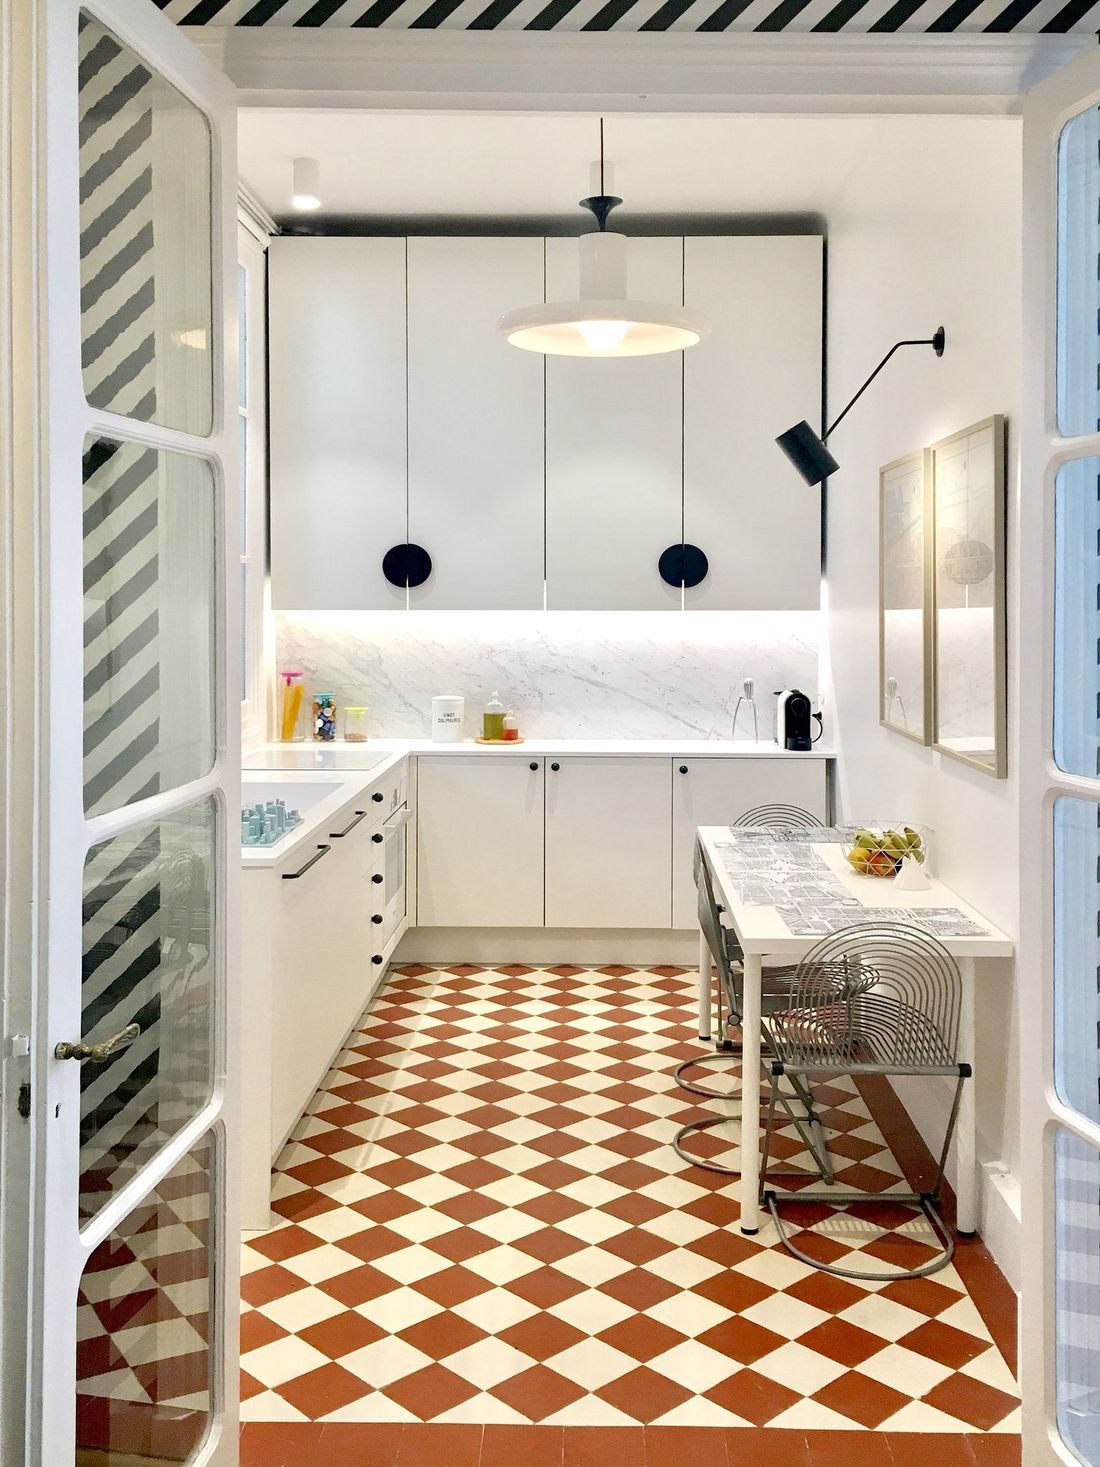 Checkered Floor in Parisian Kitchens